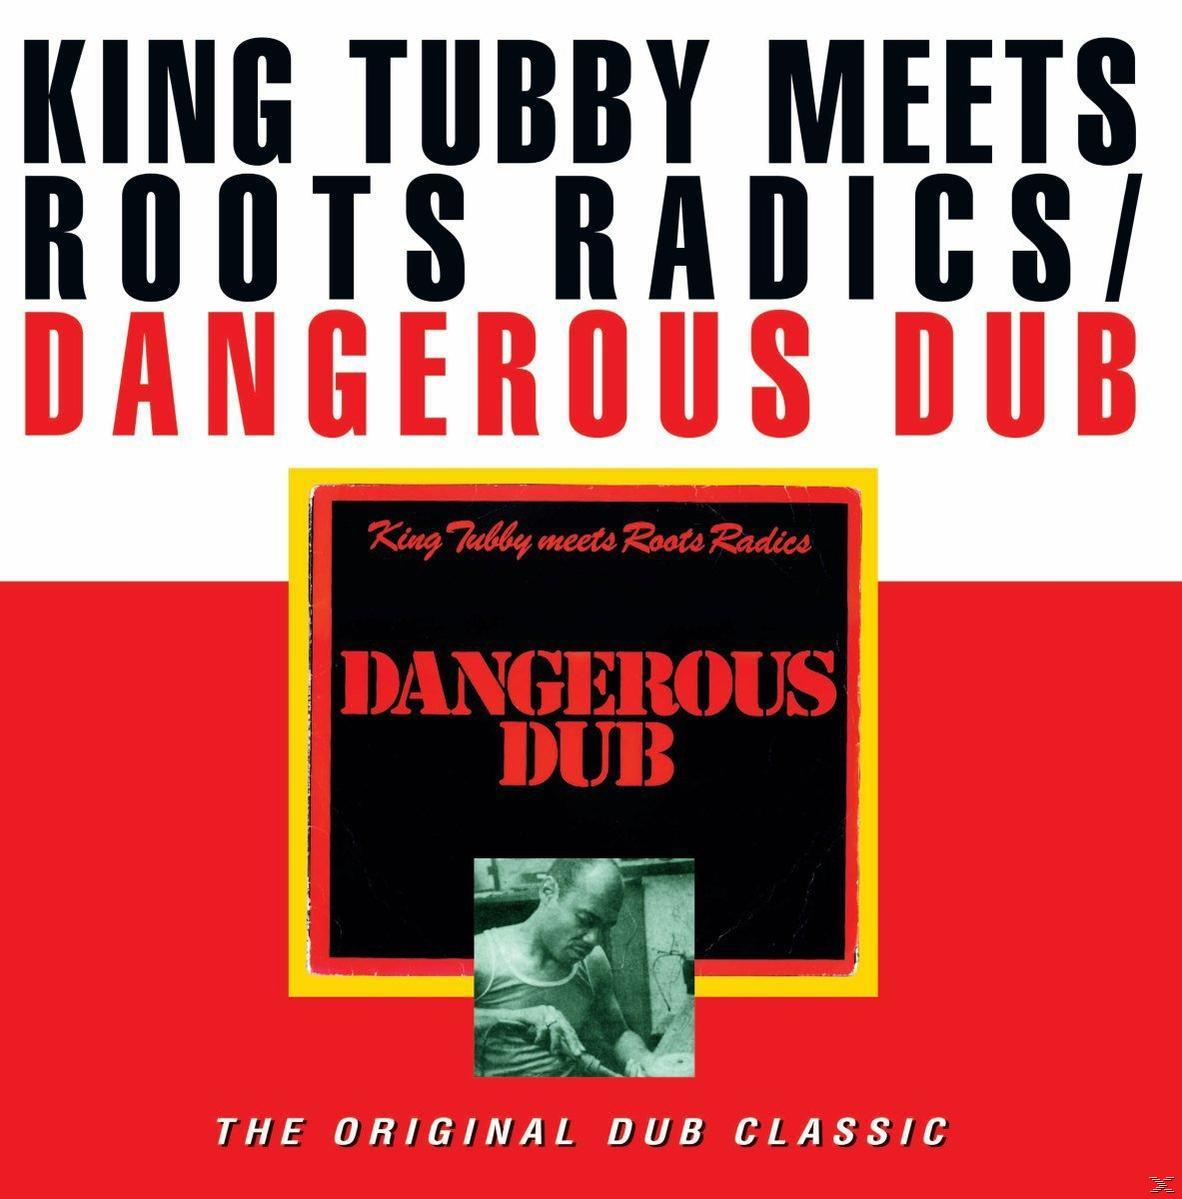 King Tubby DUB Meets CLASSIC) Radics DANGEROUS Roots (Vinyl) ORIGINAL DUB - - (THE